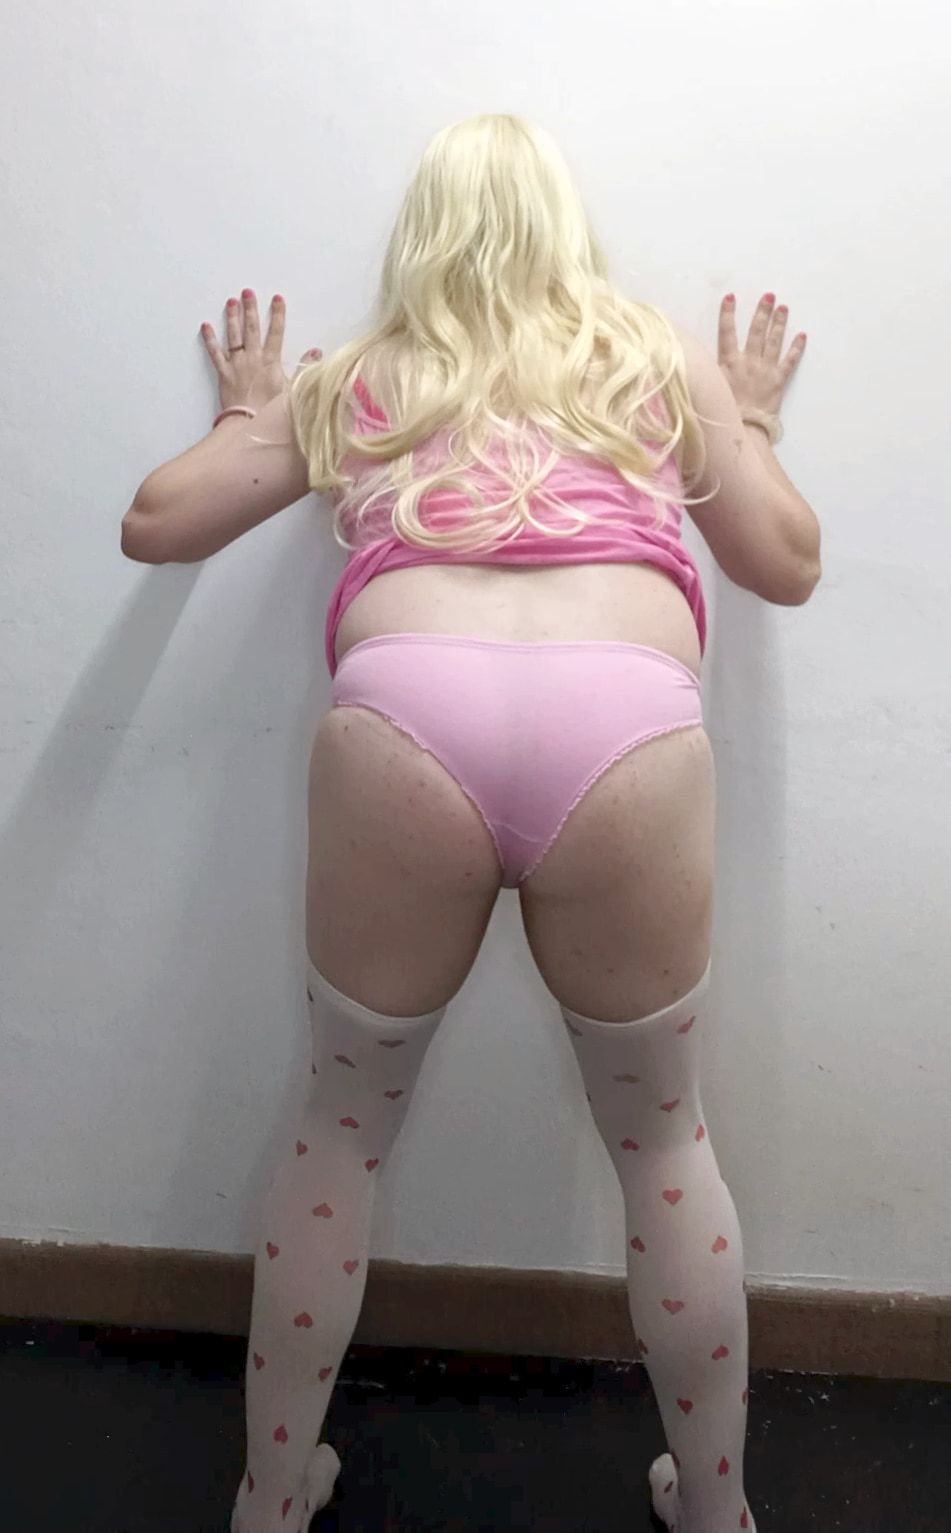 Crossdresser in pink outfit #21